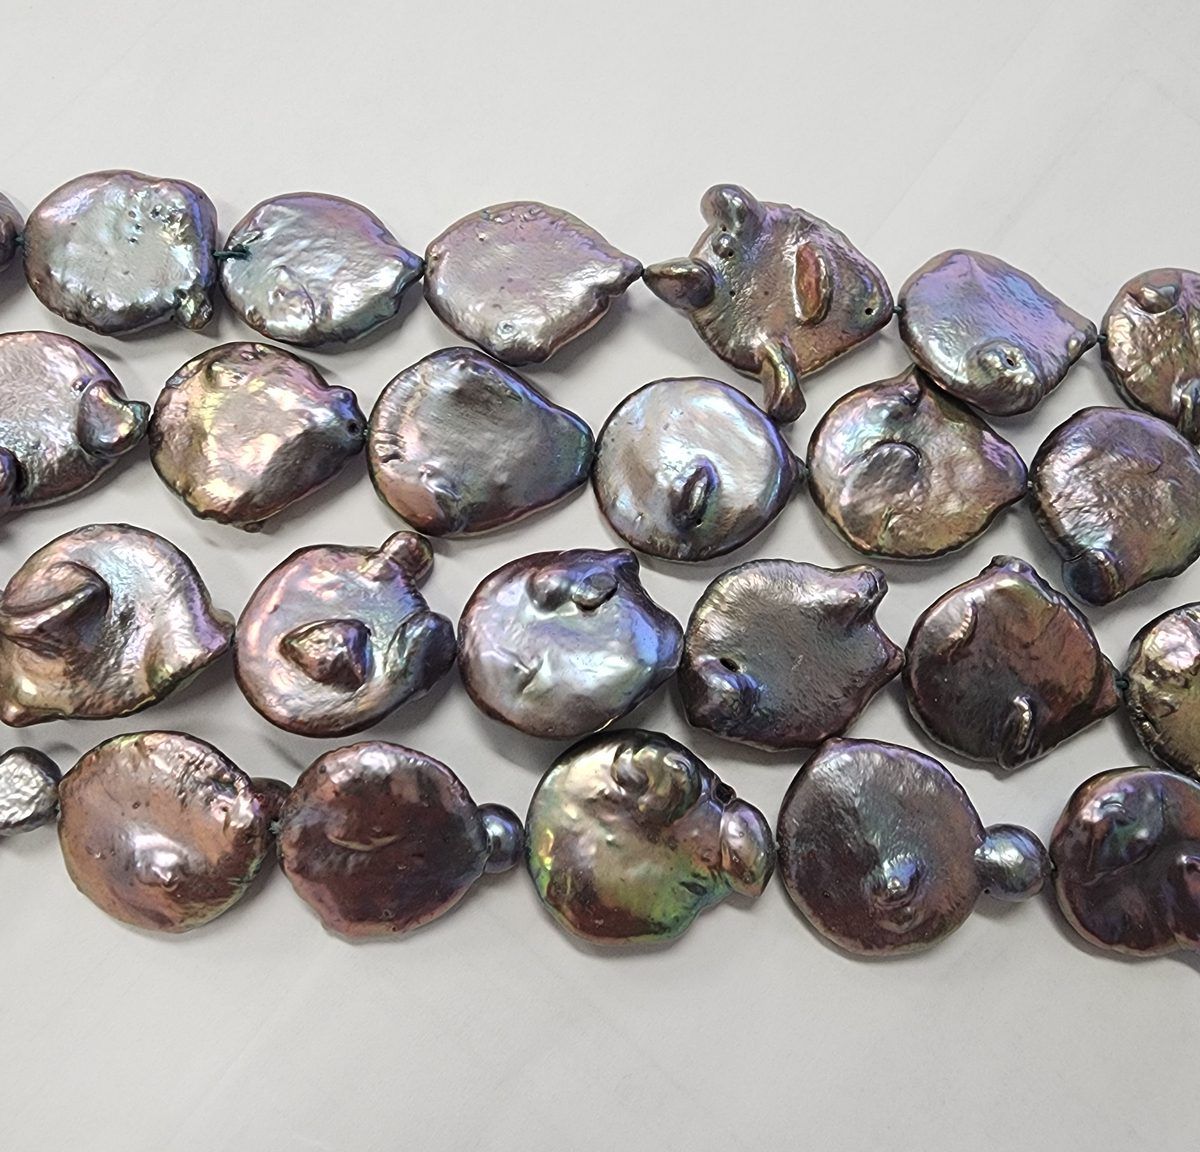 Wholesale Natural Baroque Keshi Pearl Beads 